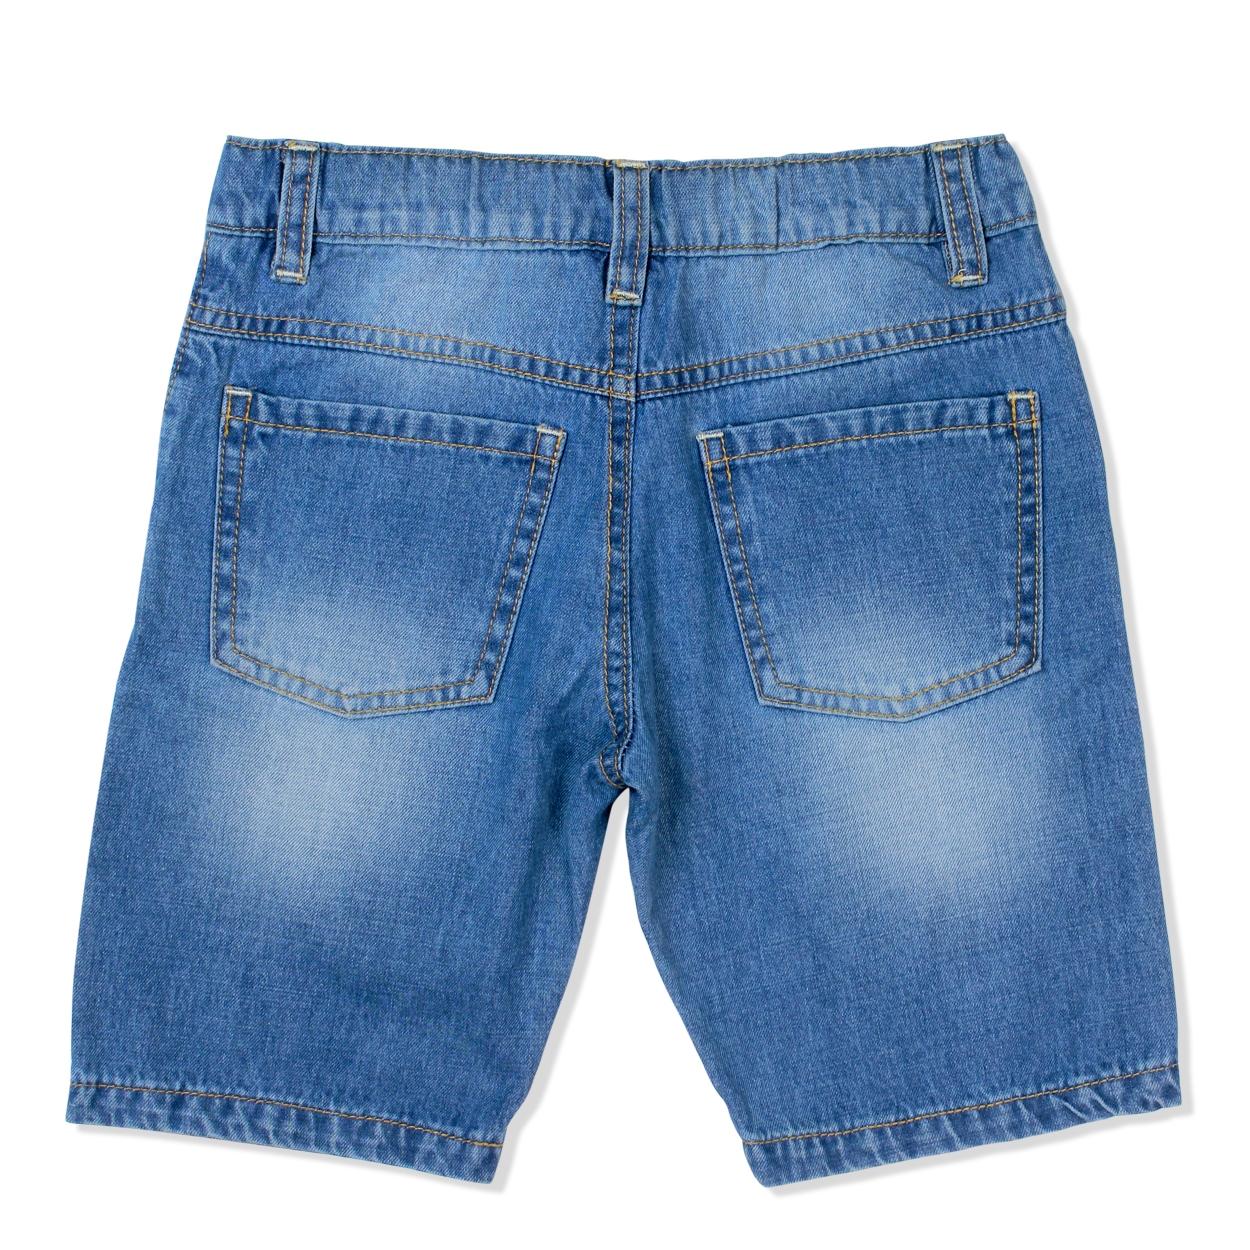 Quần Jeans bé trai ngắn B017003 (2T, Xanh jean)